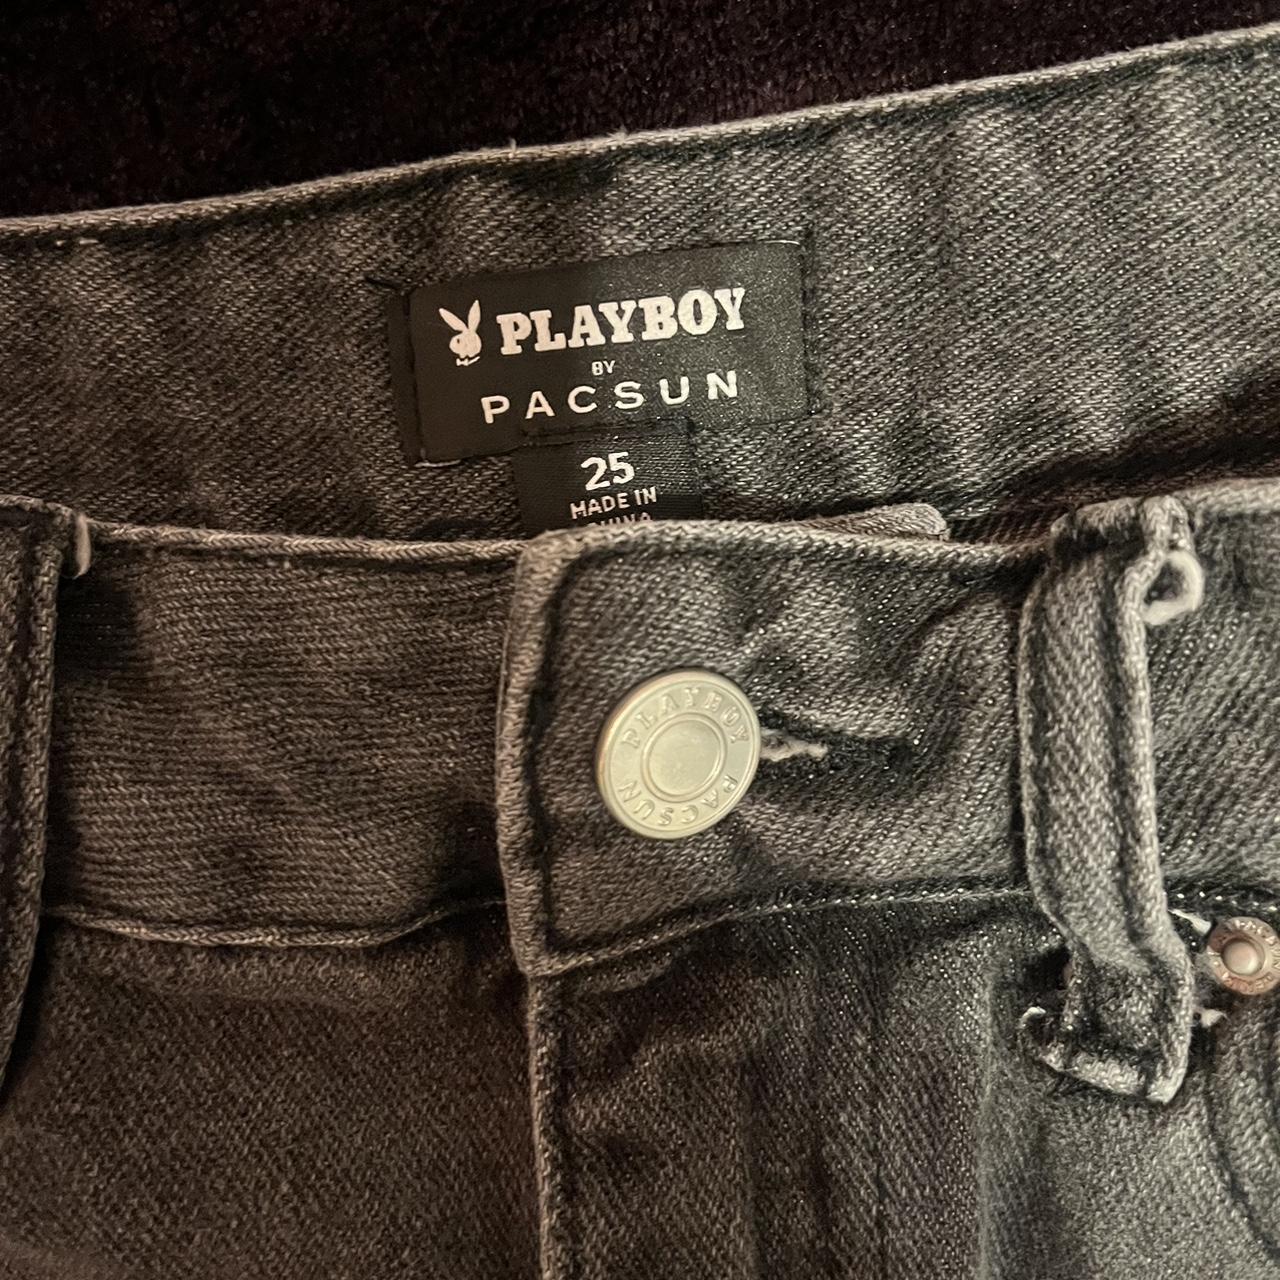 Playboy skirt Bedazzled Rhinestone Playboy signs in... - Depop